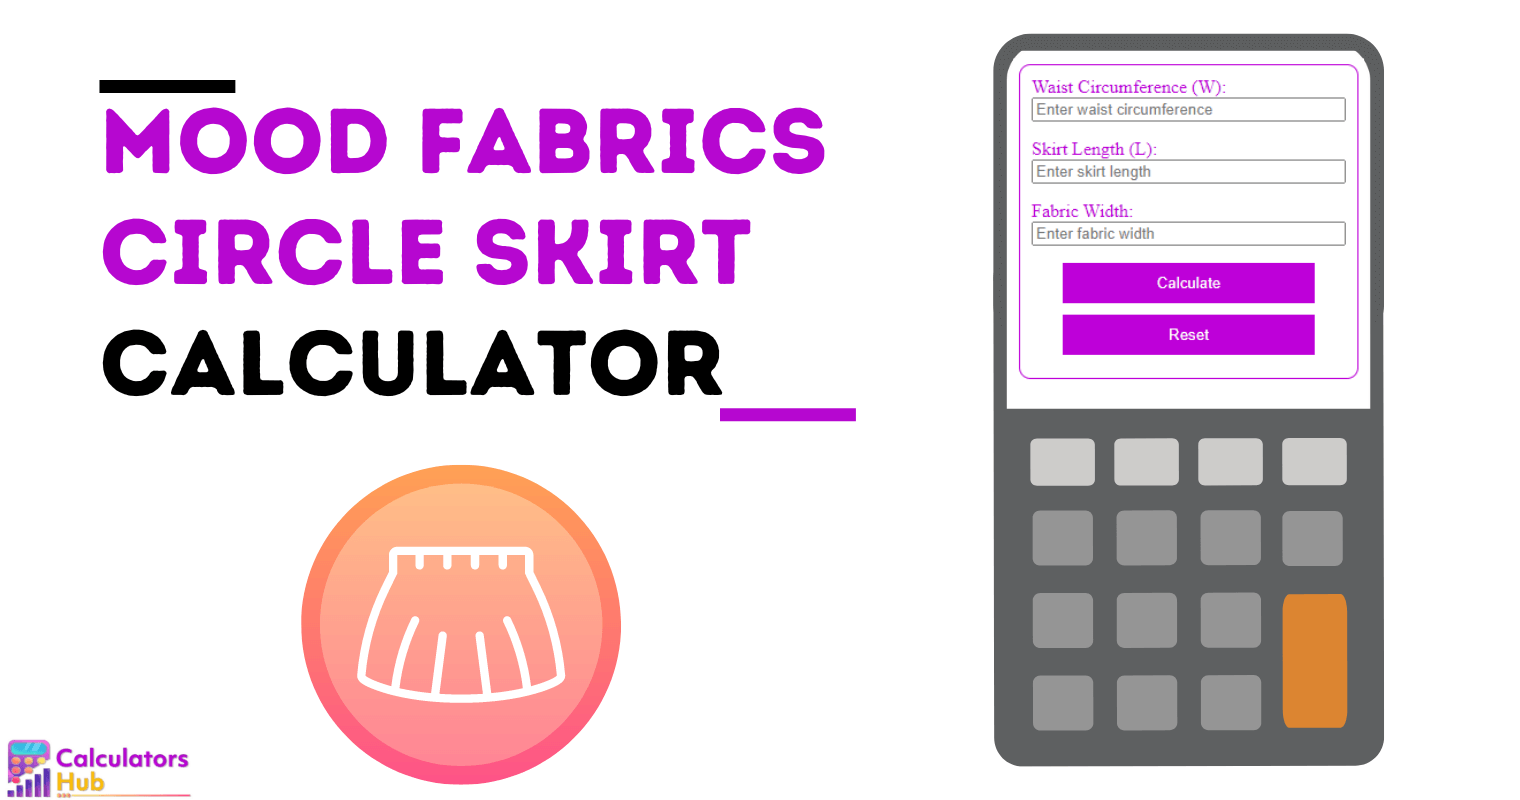 Mood Fabrics Circle Skirt Calculator